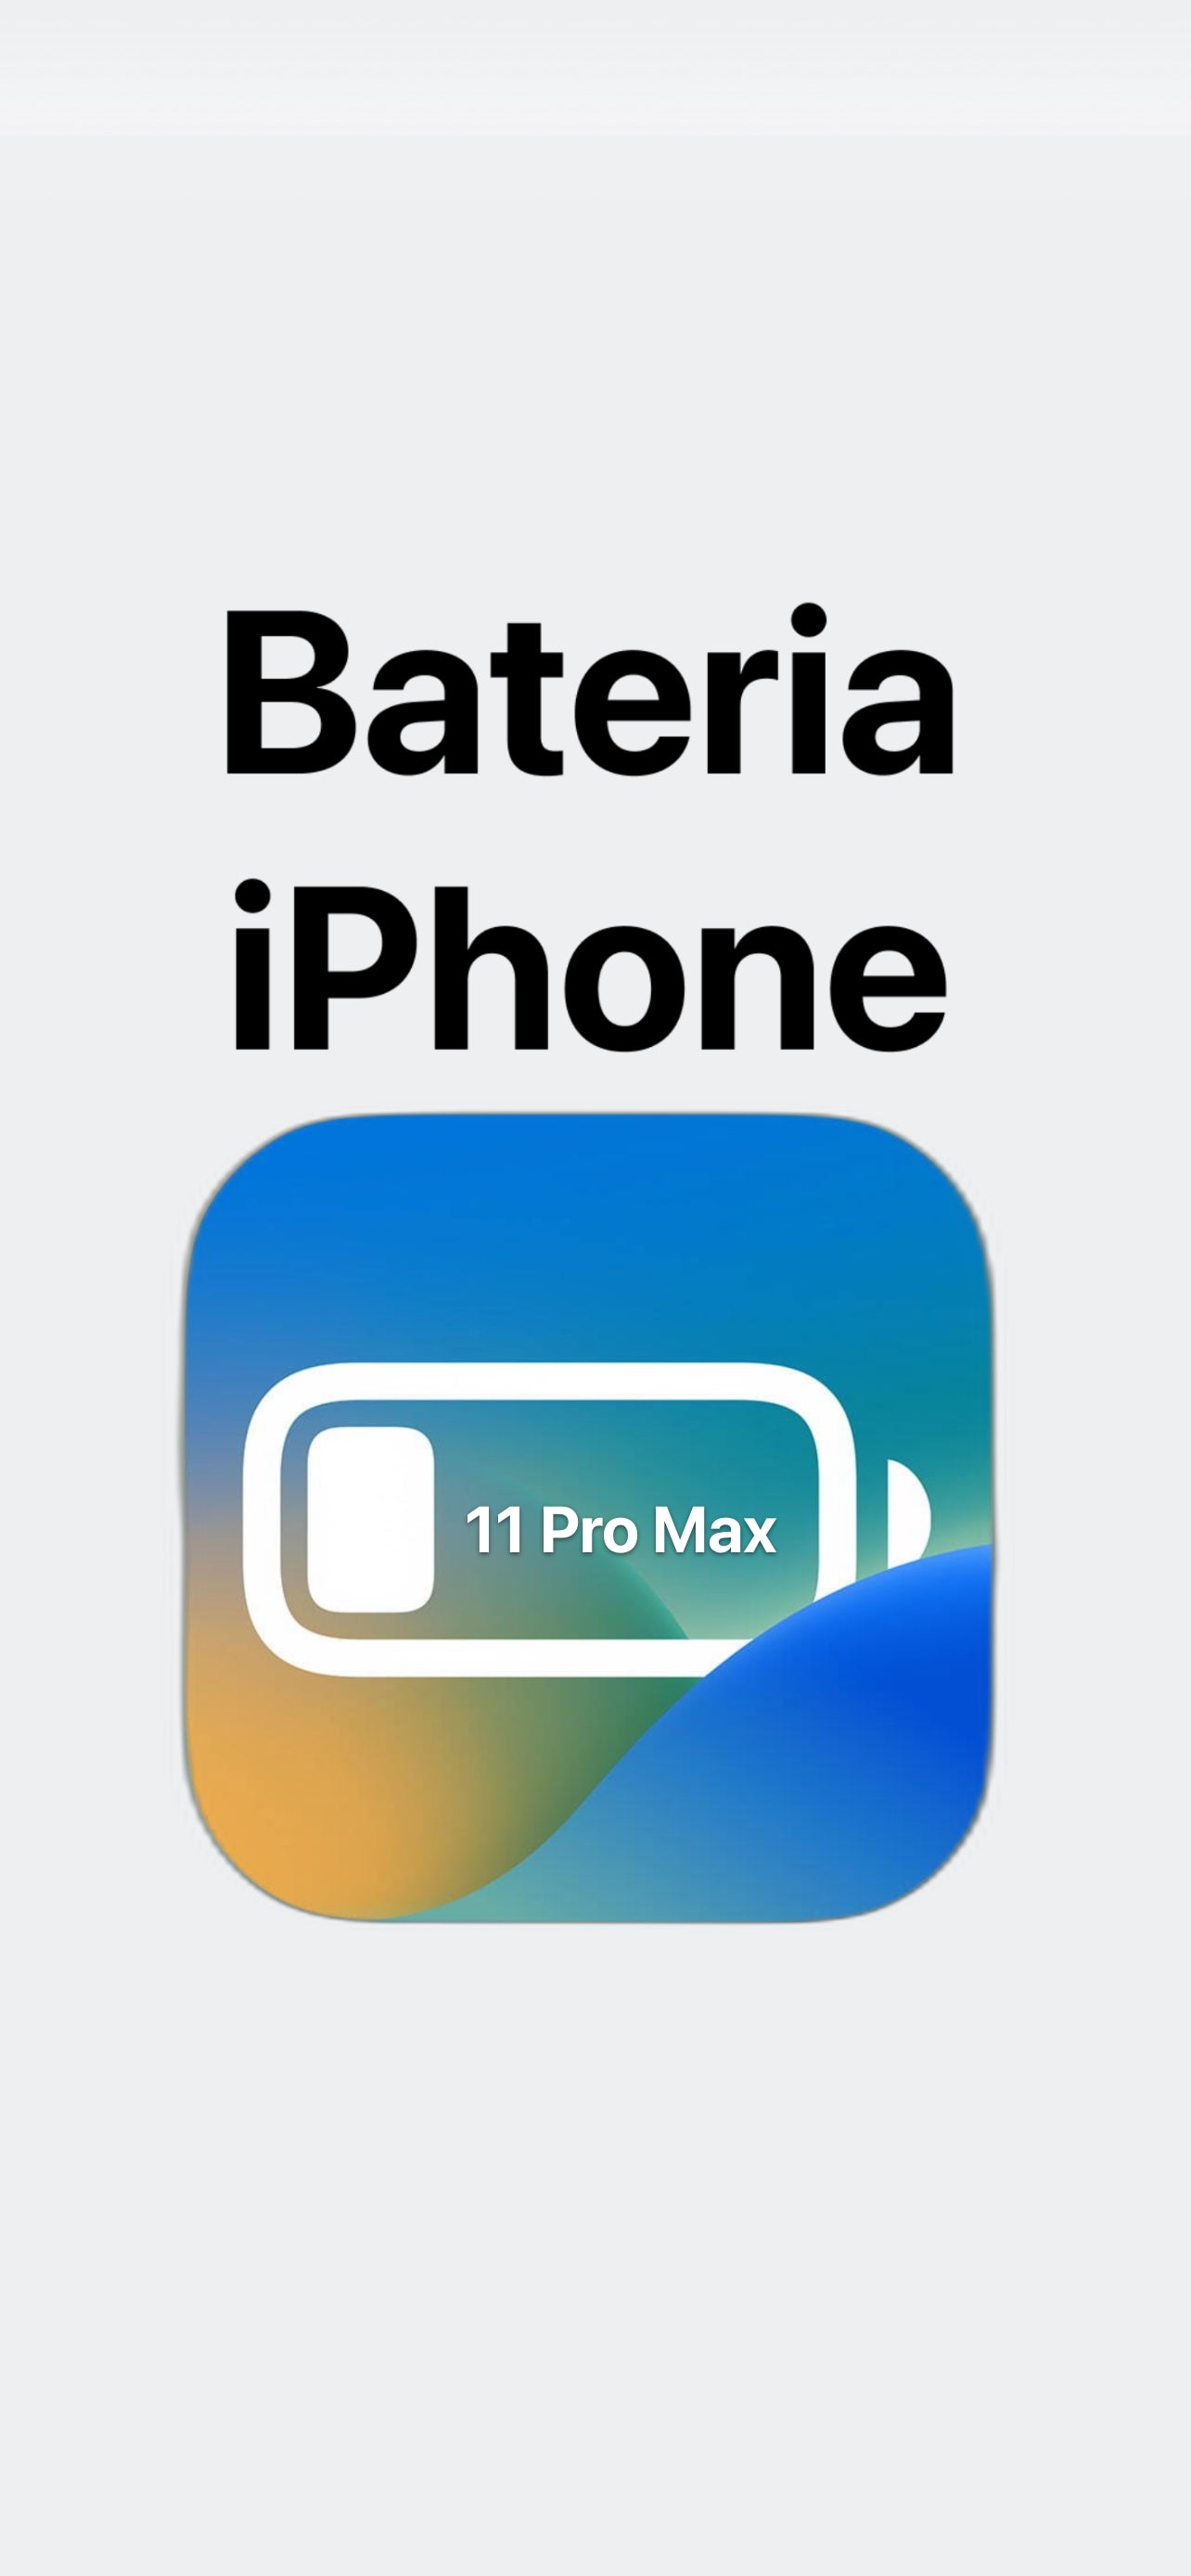 Cambio de Bateria iPhone 11 Pro Max